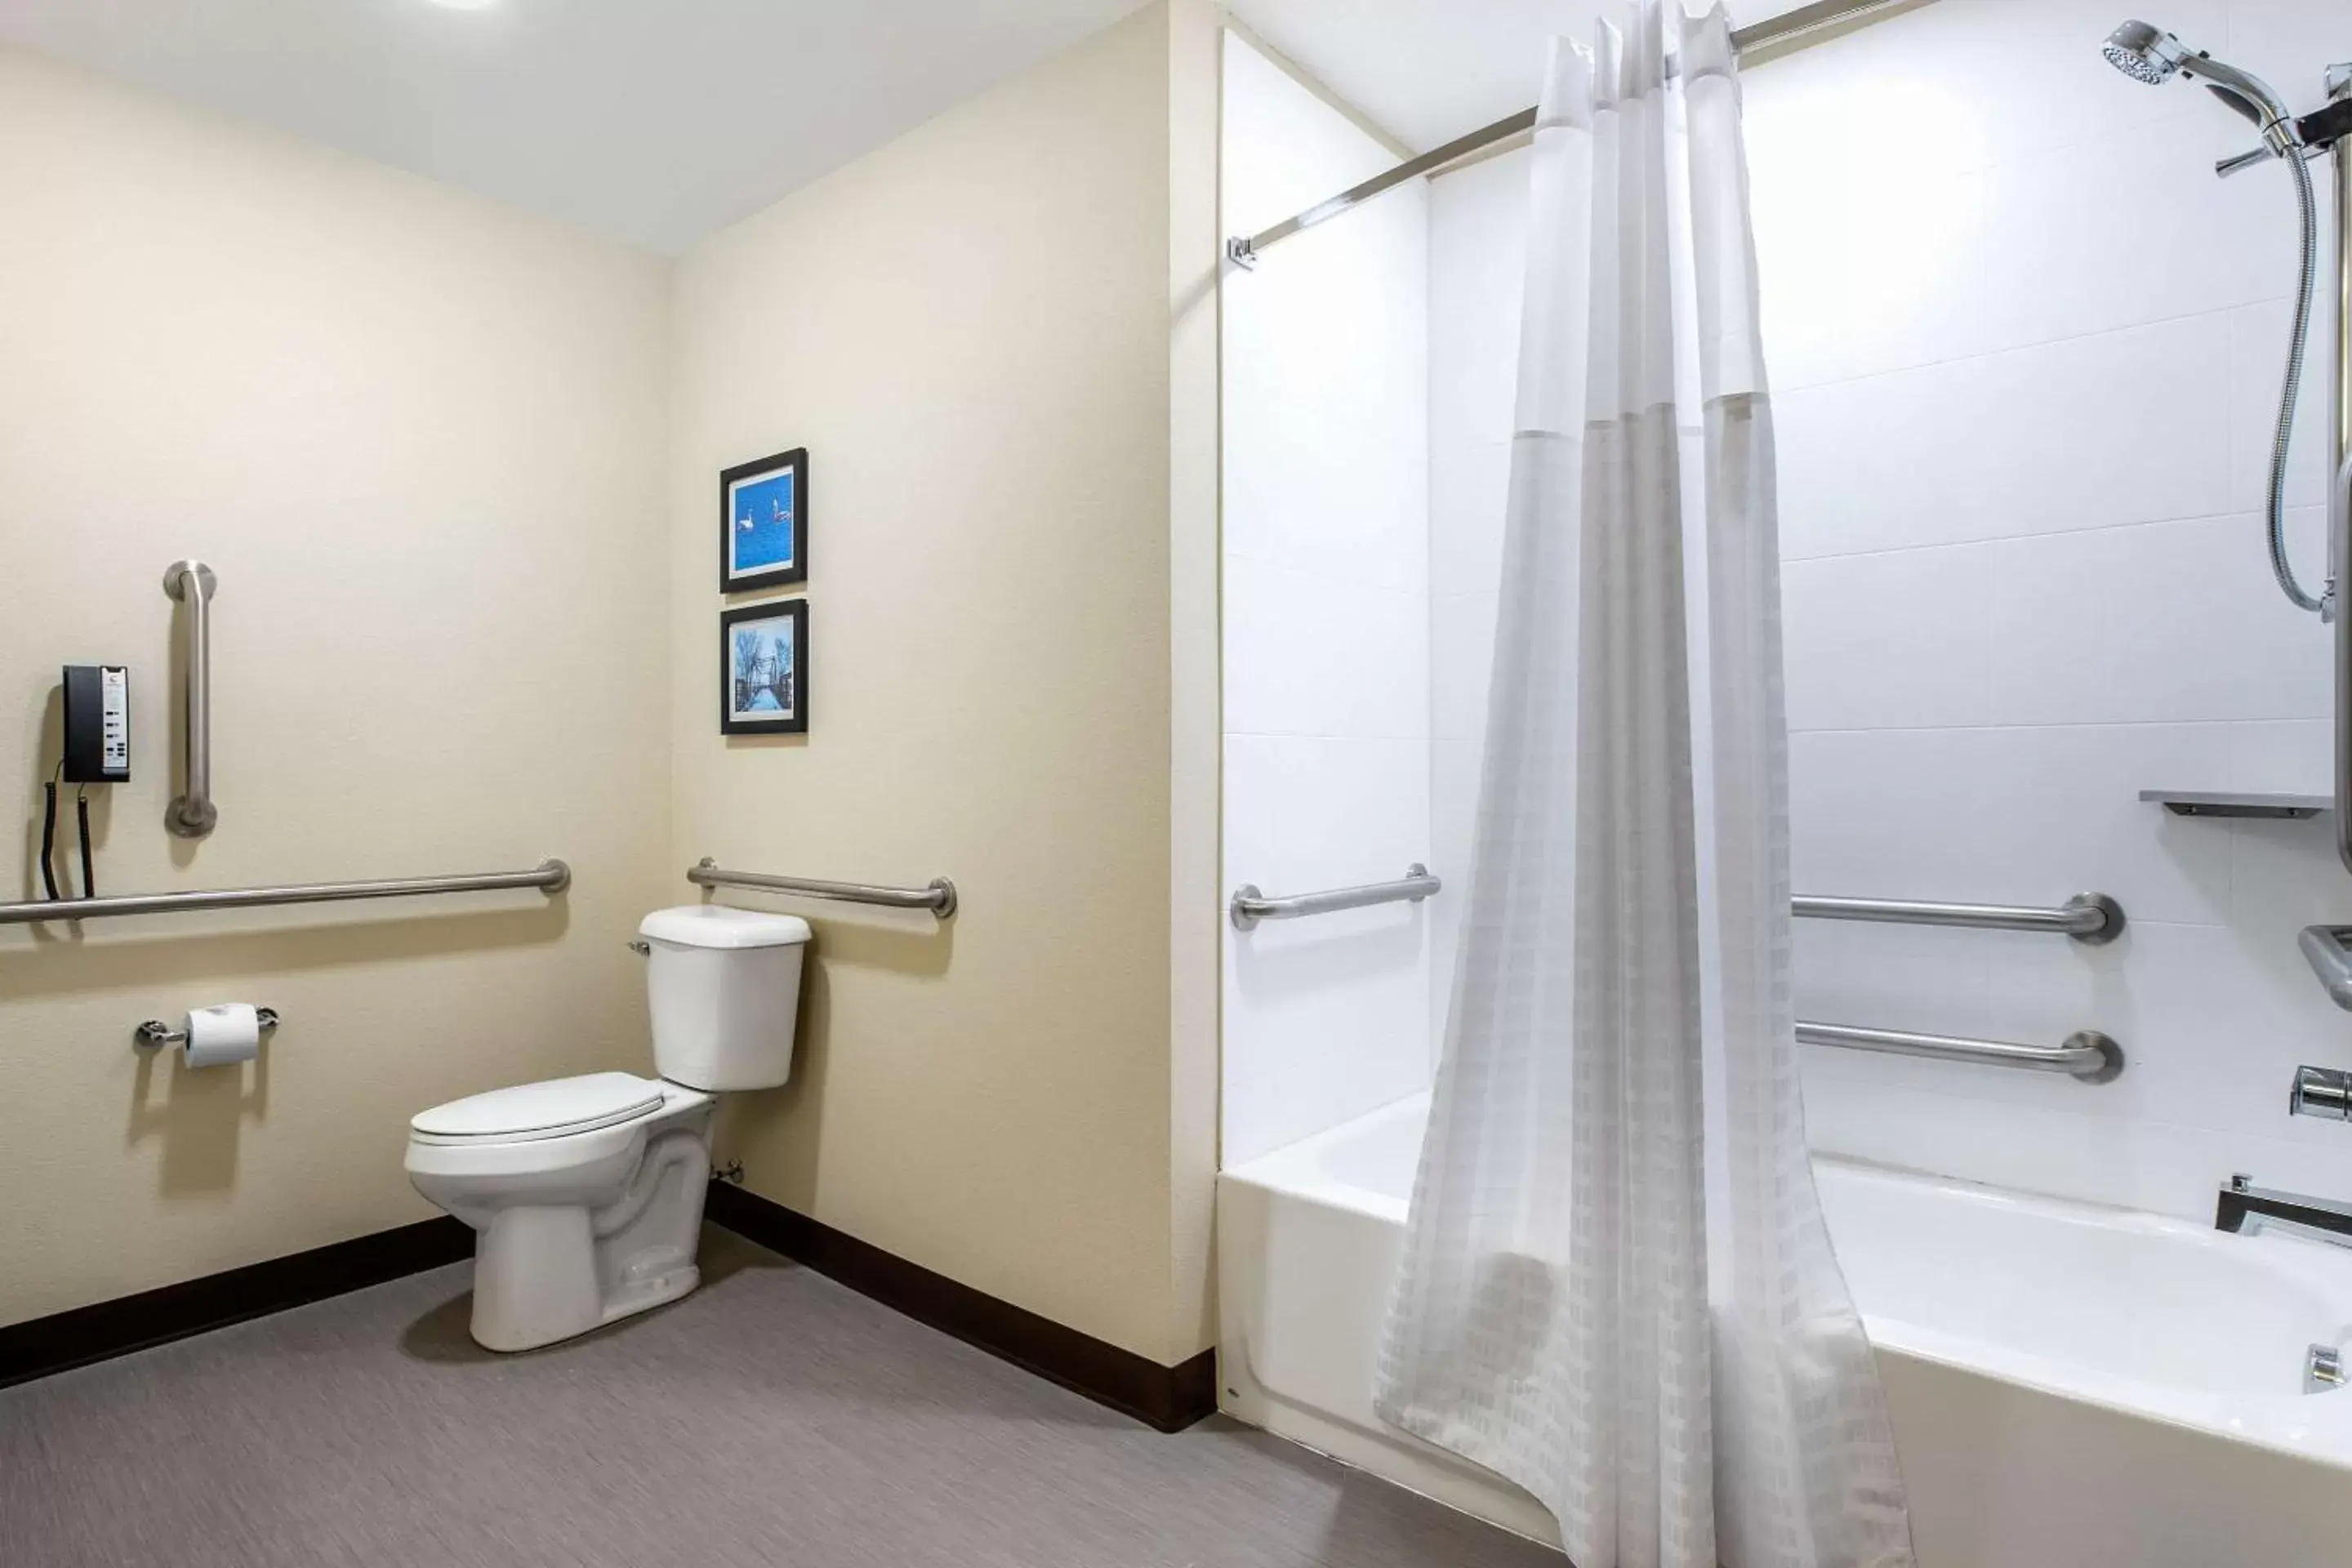 Bathroom in Comfort Inn and Suites Ames near ISU Campus